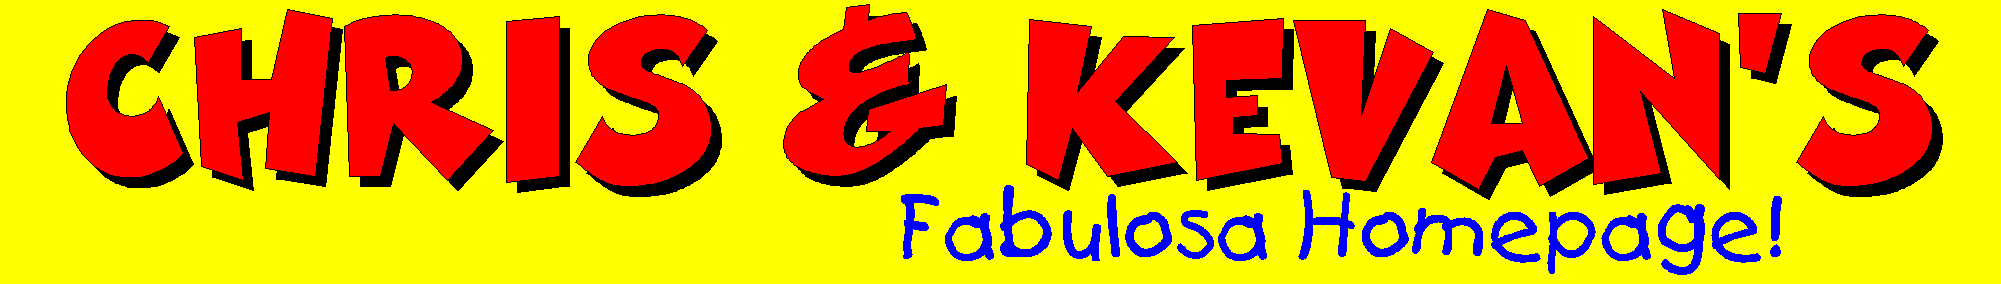 Chris&Kevan's Fabulosa Homepage banner